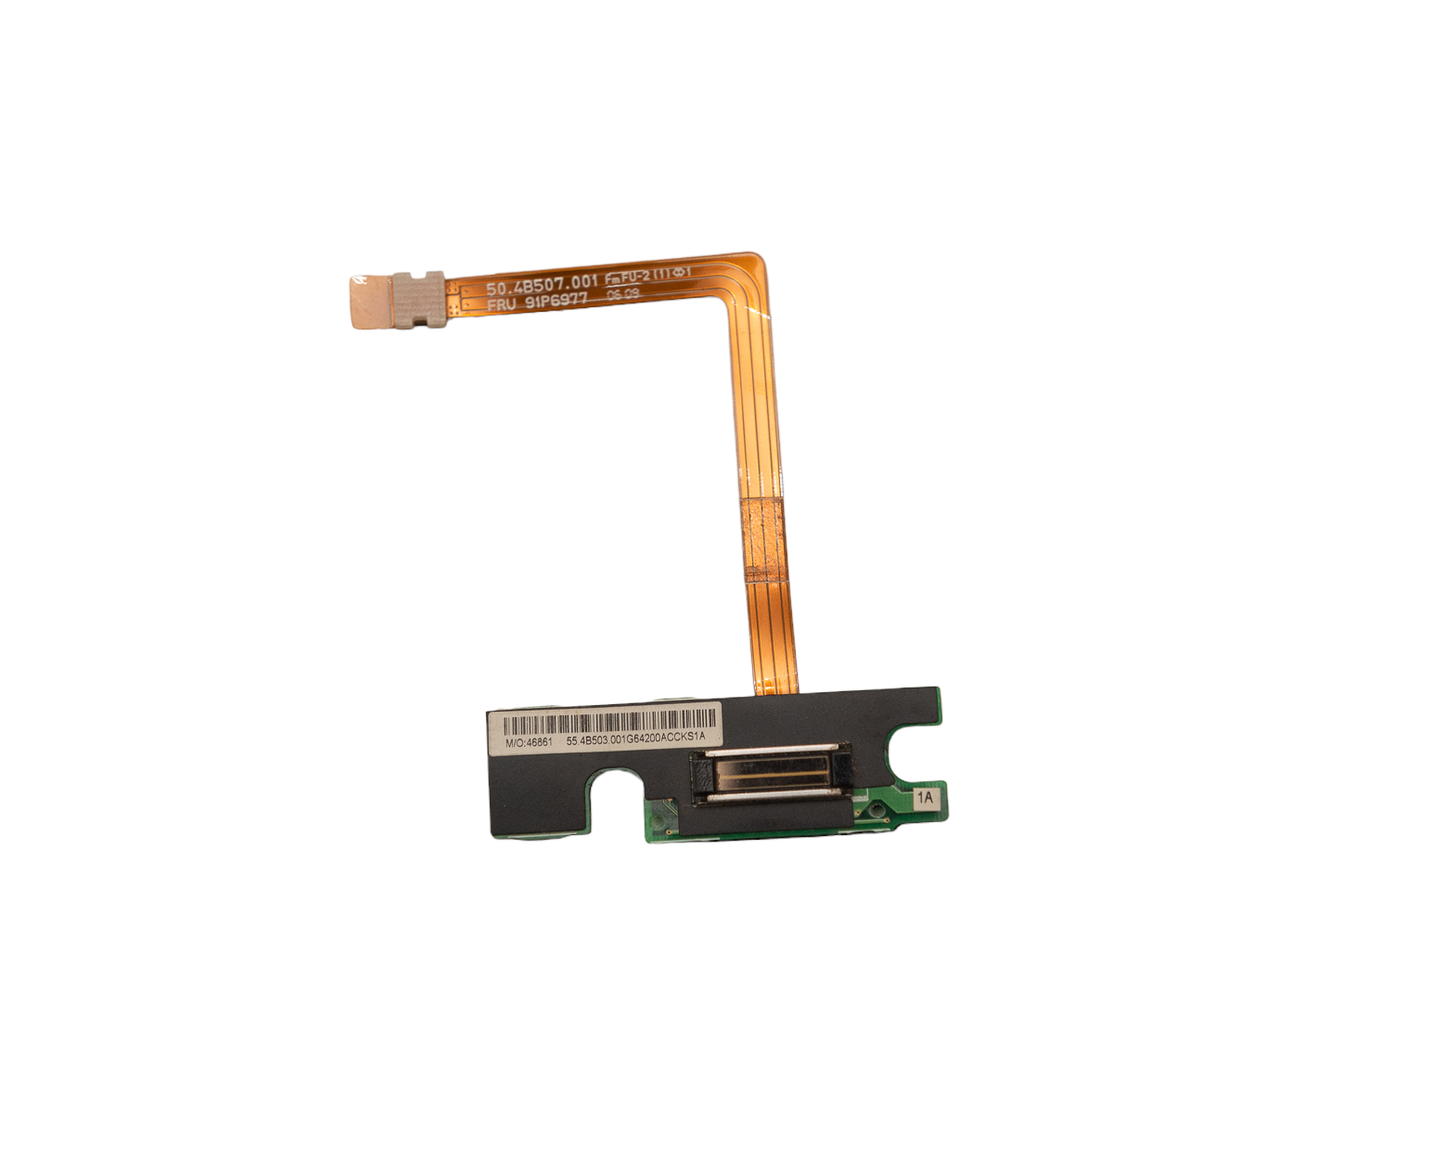 Sensor de Impressão Digital FRU42T0065 + Flat FRU91P6977 IBM Thinkpad X60